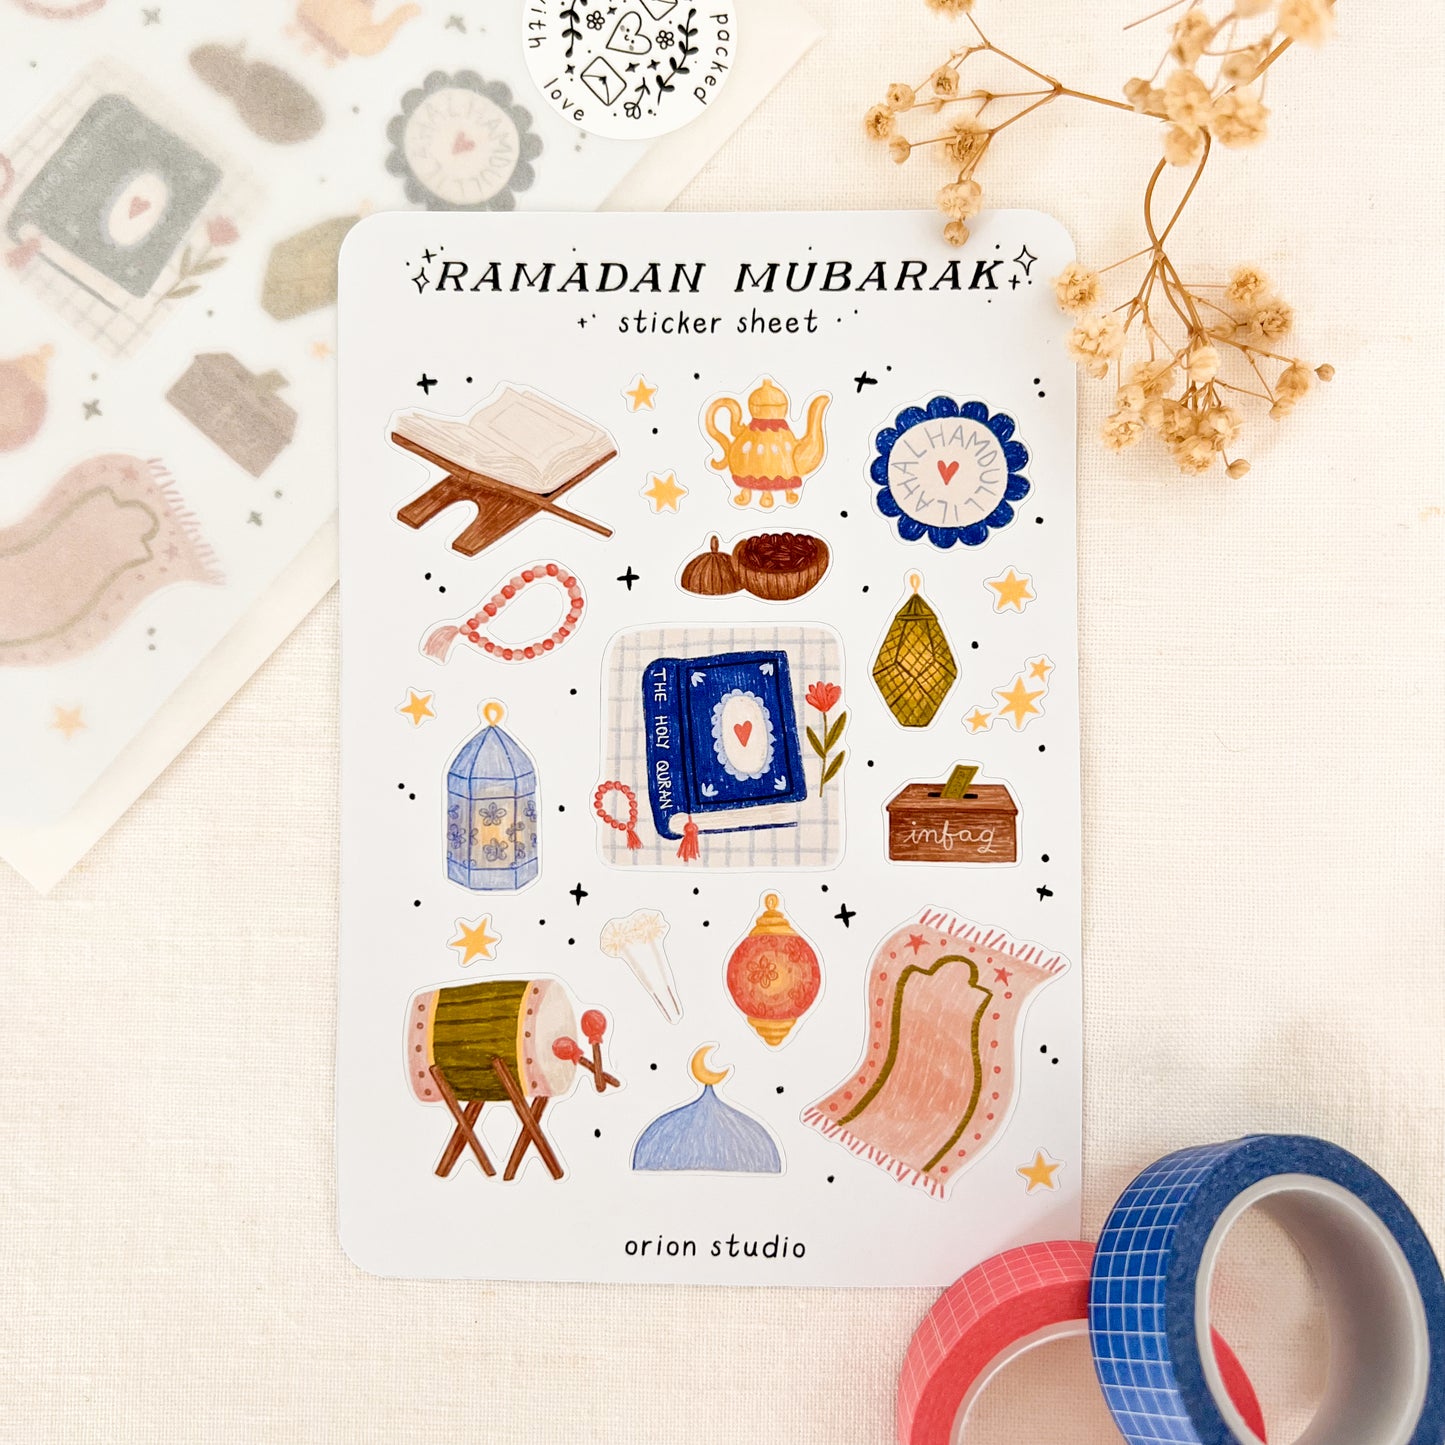 'RAMADAN MUBARAK' sticker sheet